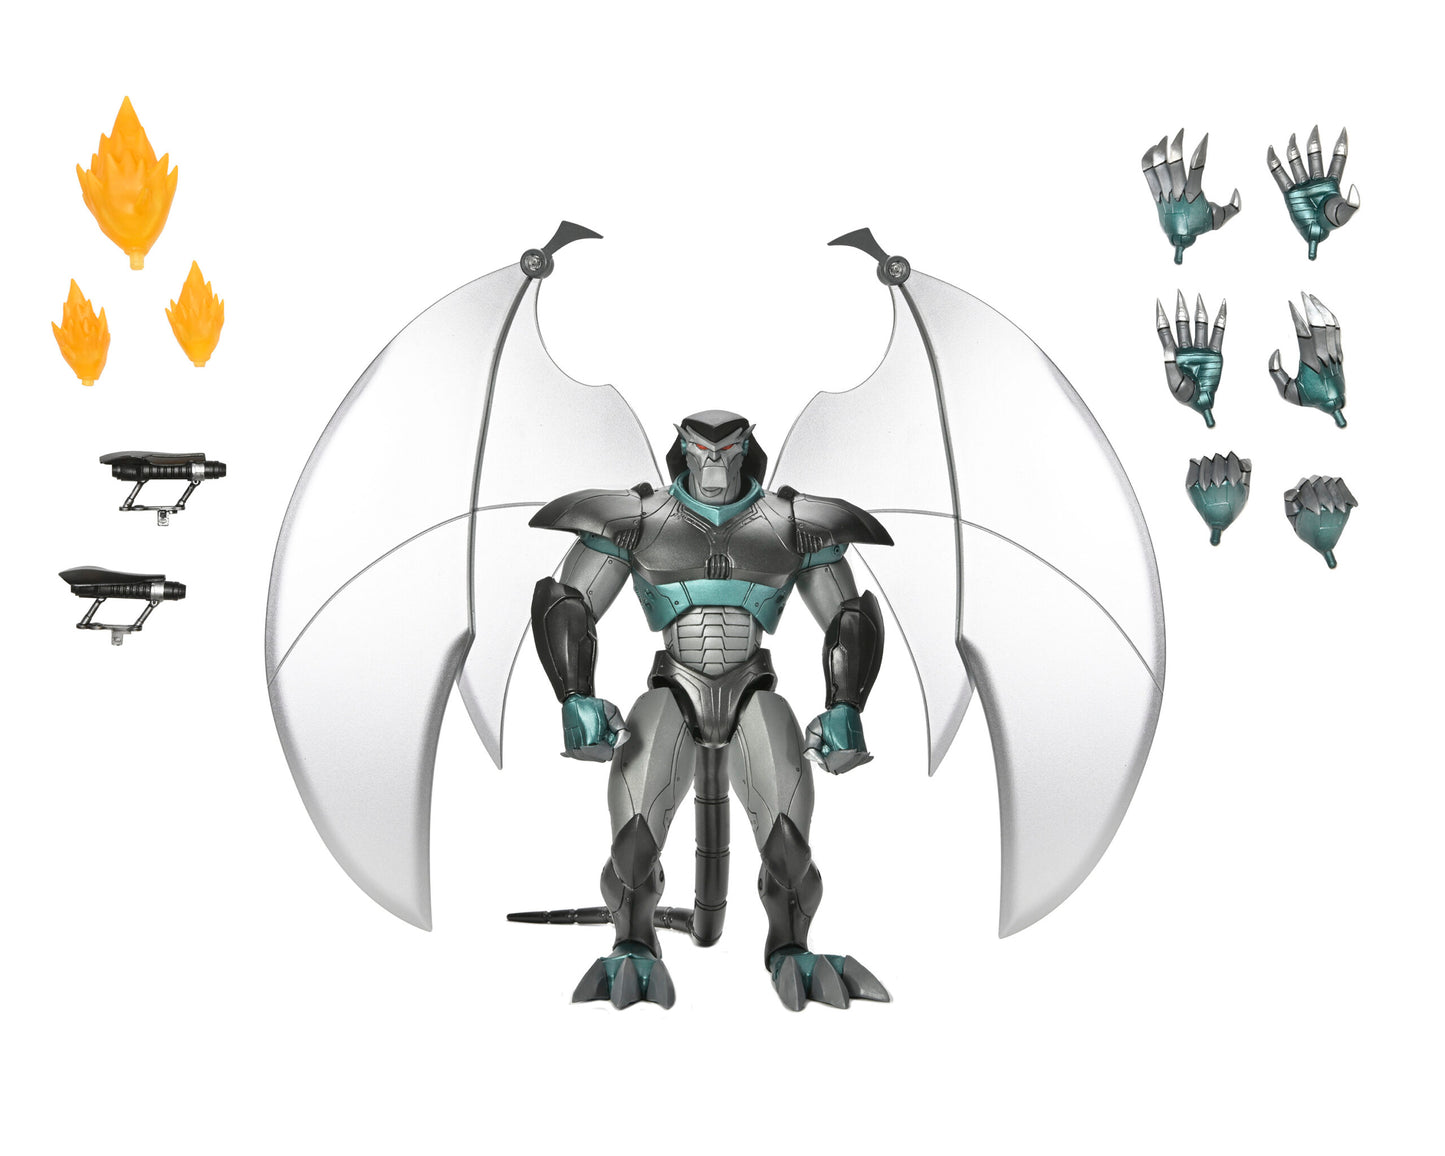 N.E.C.A - Gargoyles -  7″ Scale Action Figure – Ultimate Steel Clan Robot